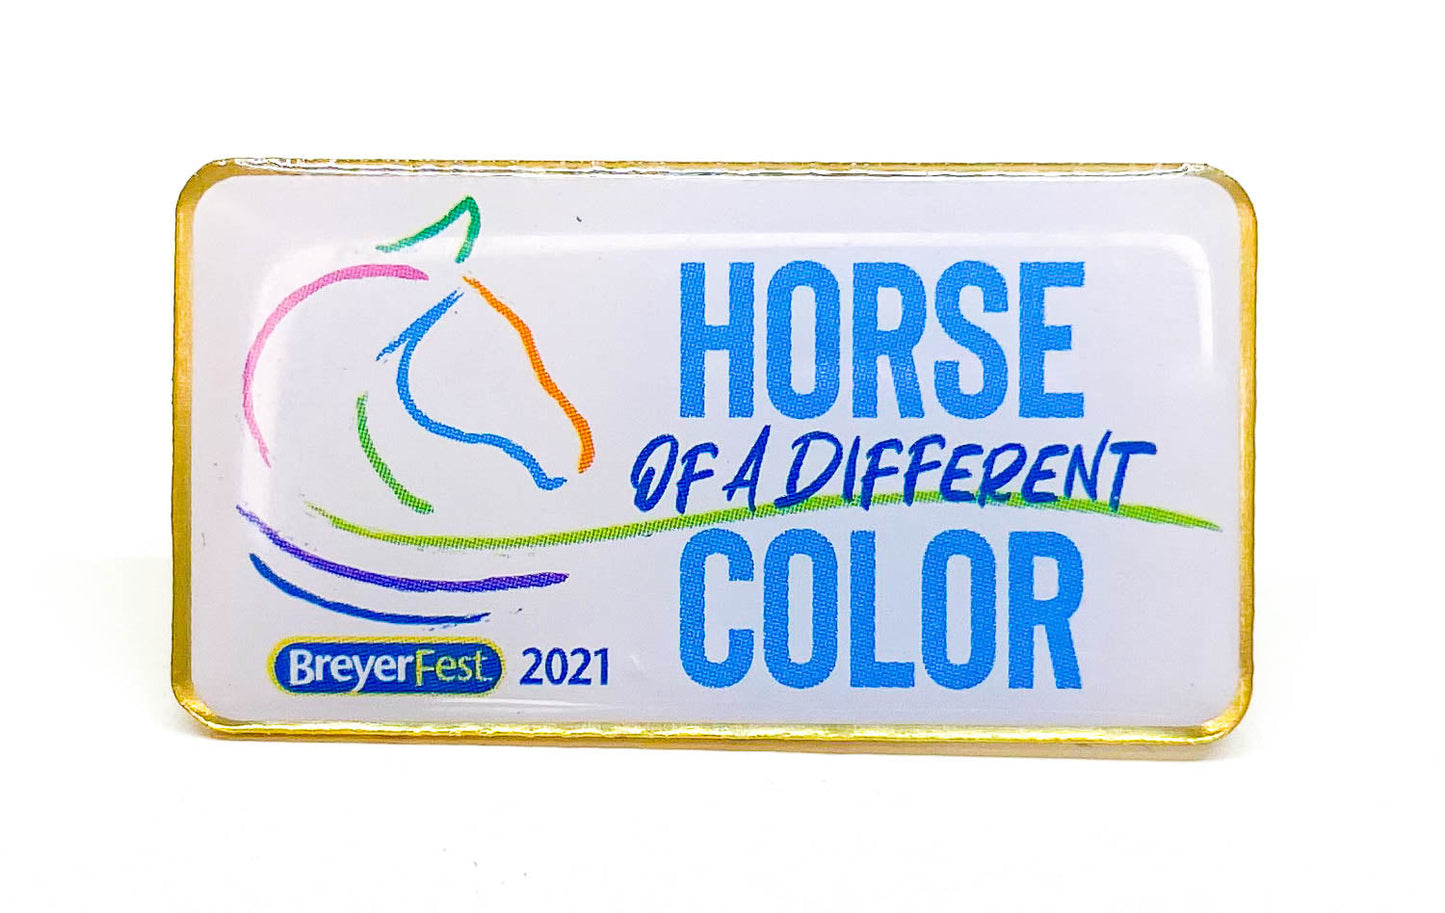 Lapel Pin - Breyerfest 2021 "Horse of a Different Color"